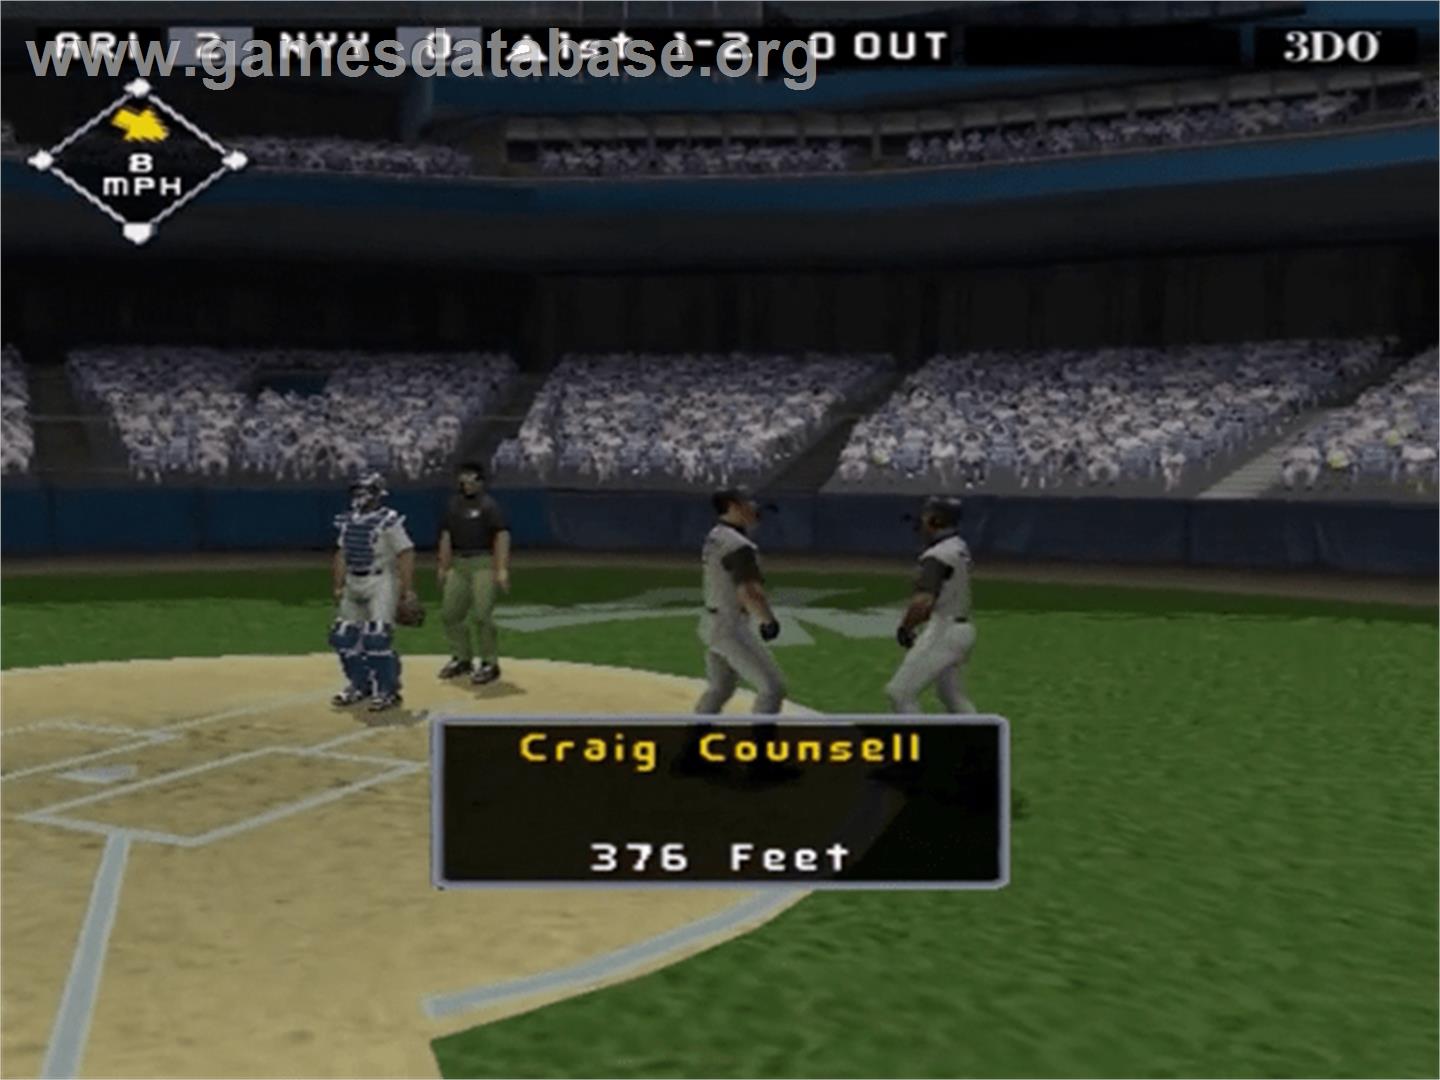 High Heat Major League Baseball 2004 - Sony Playstation 2 - Artwork - In Game